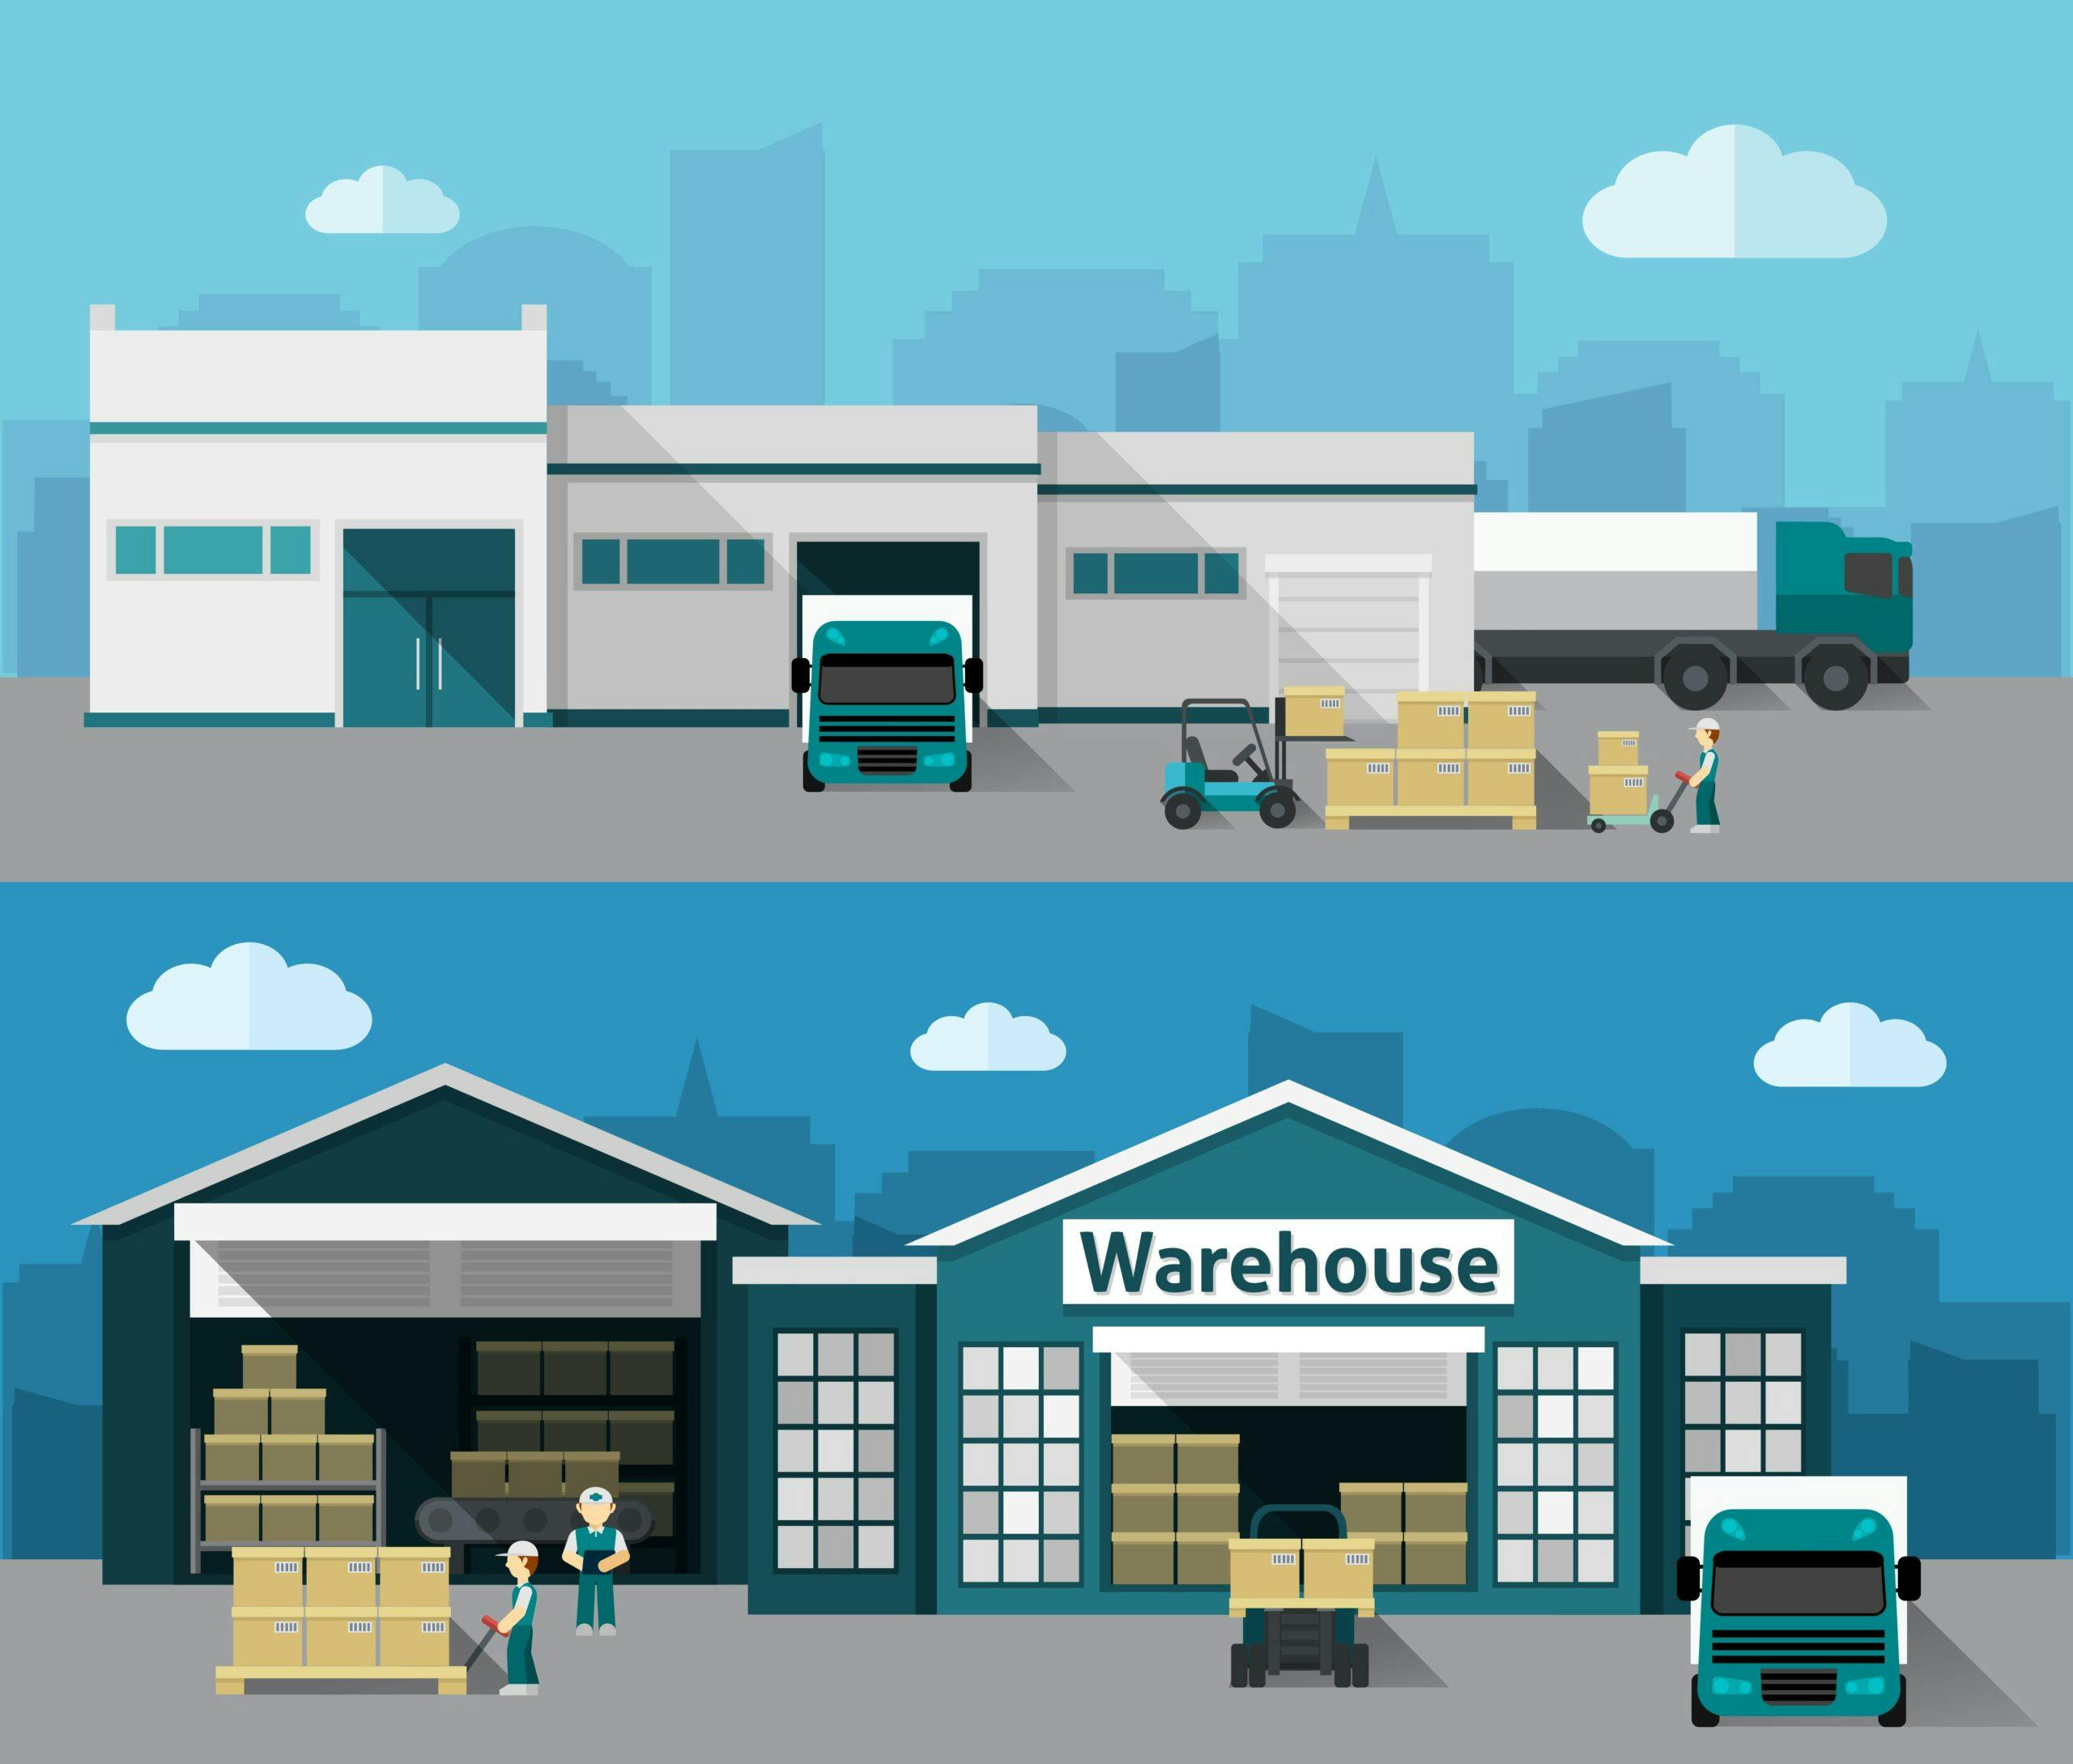 Warehouse - global supply chain